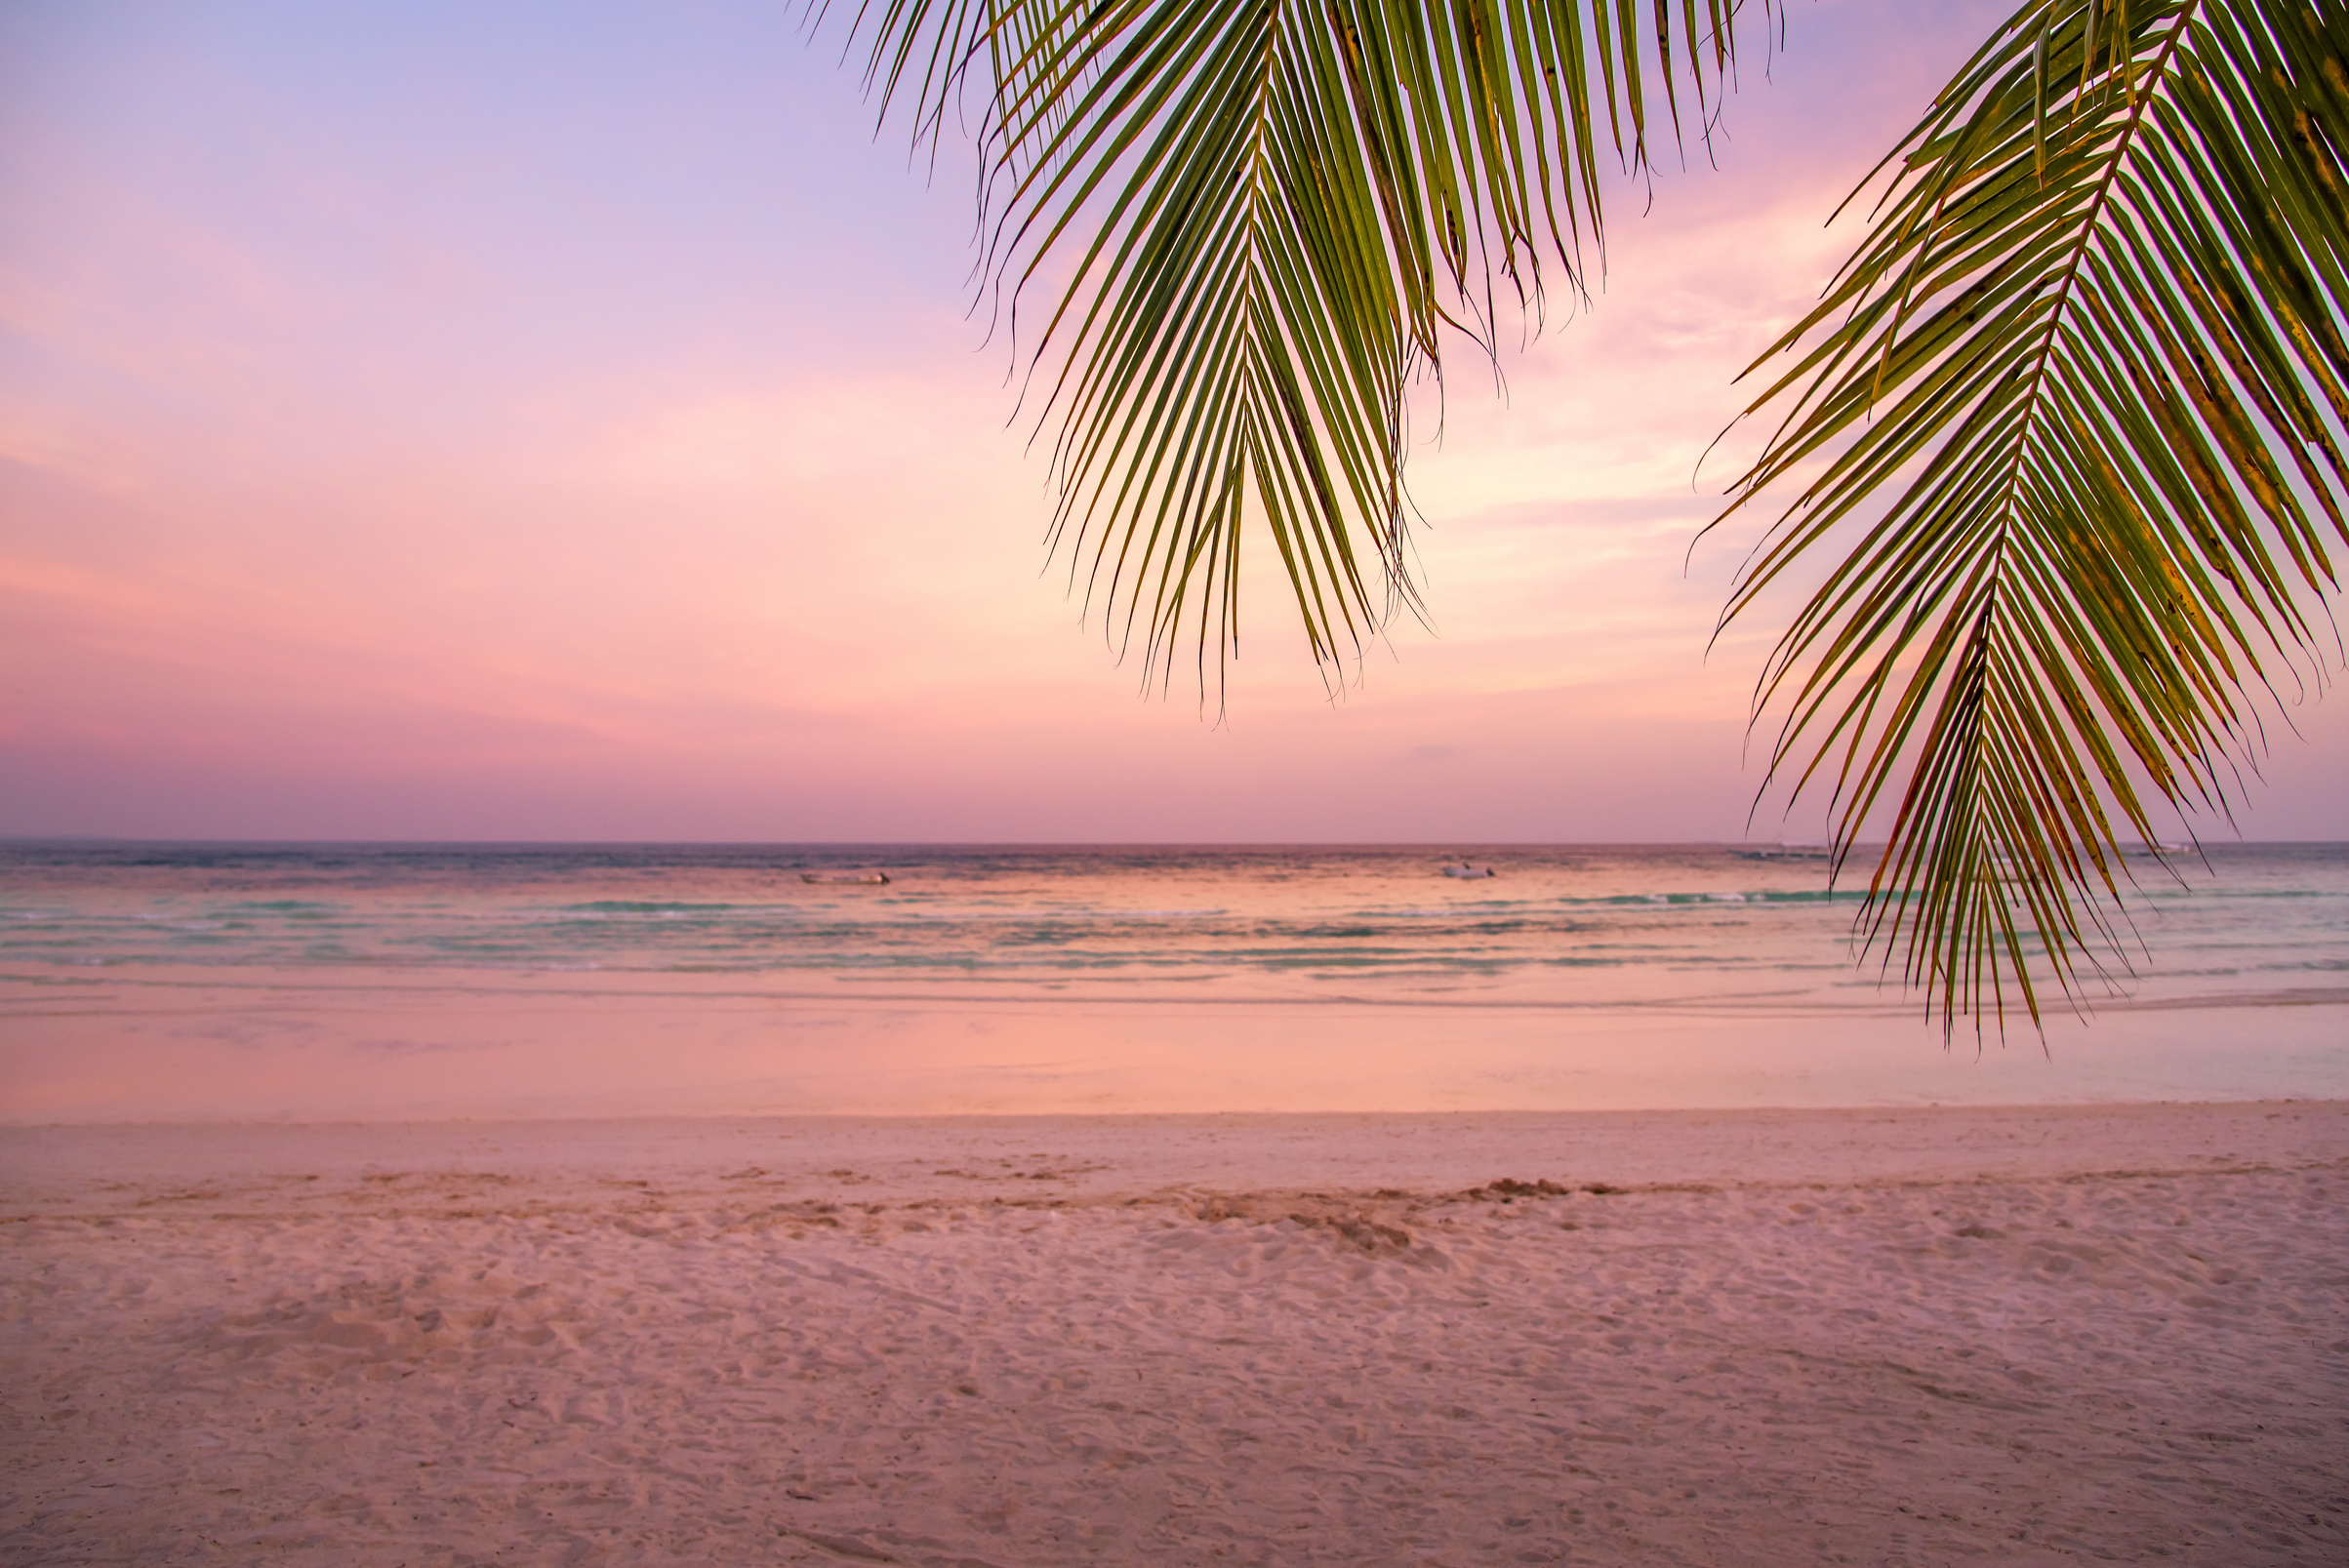 Tropical beach sunset background